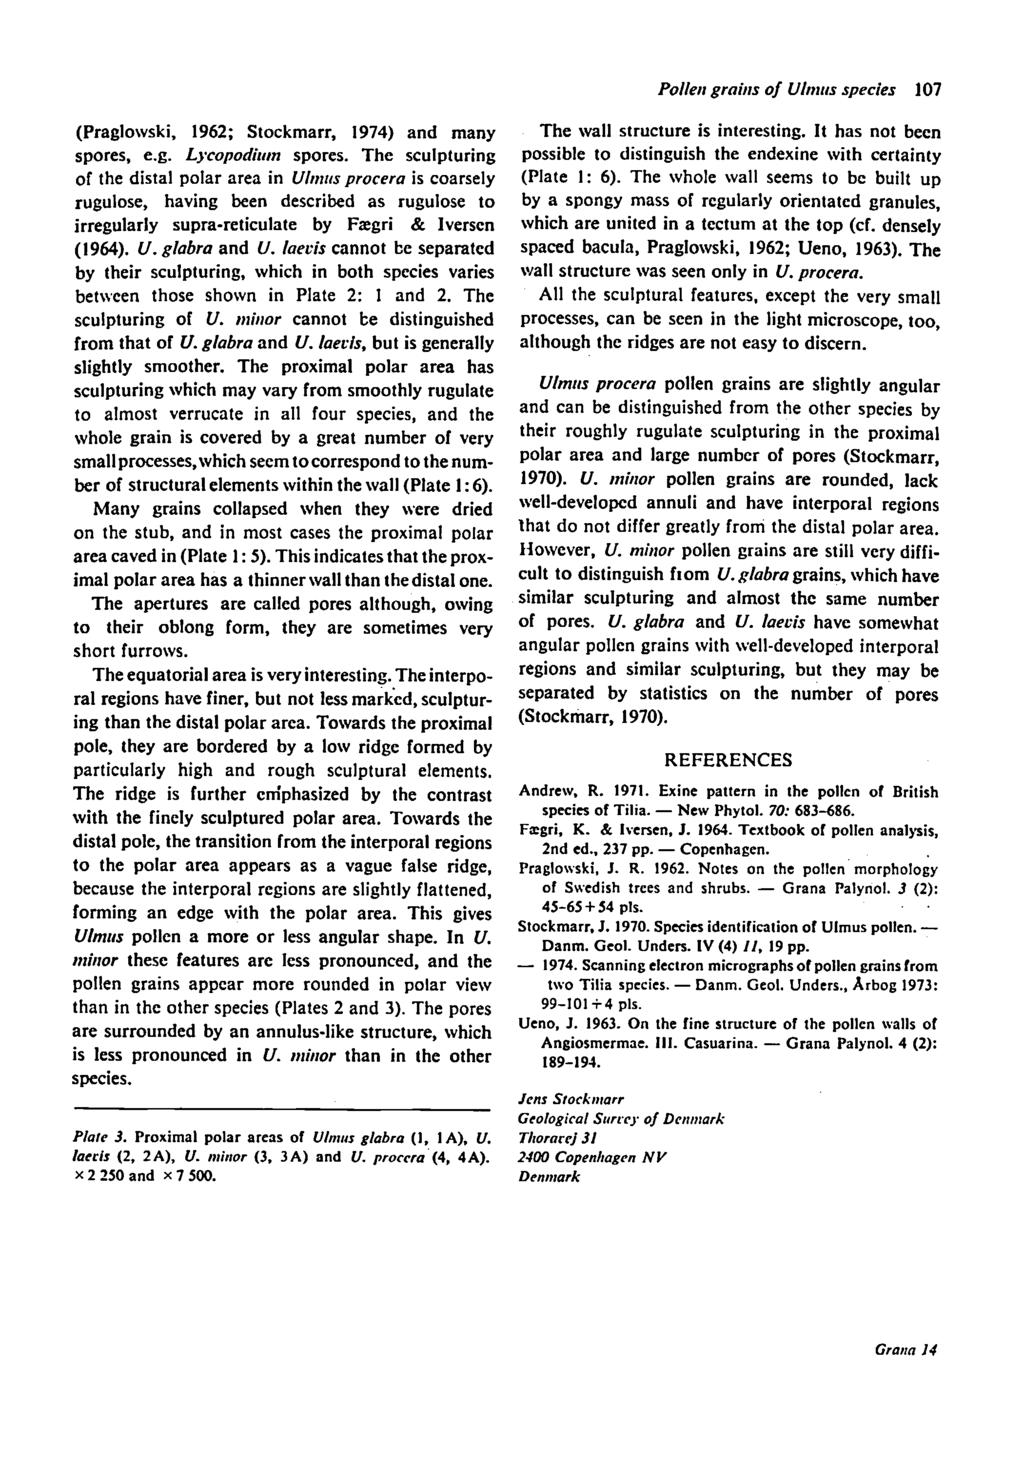 (Praglowski, 1962; Stockmarr, 1974) and many spores, e.g. Lycopodiiim spores.